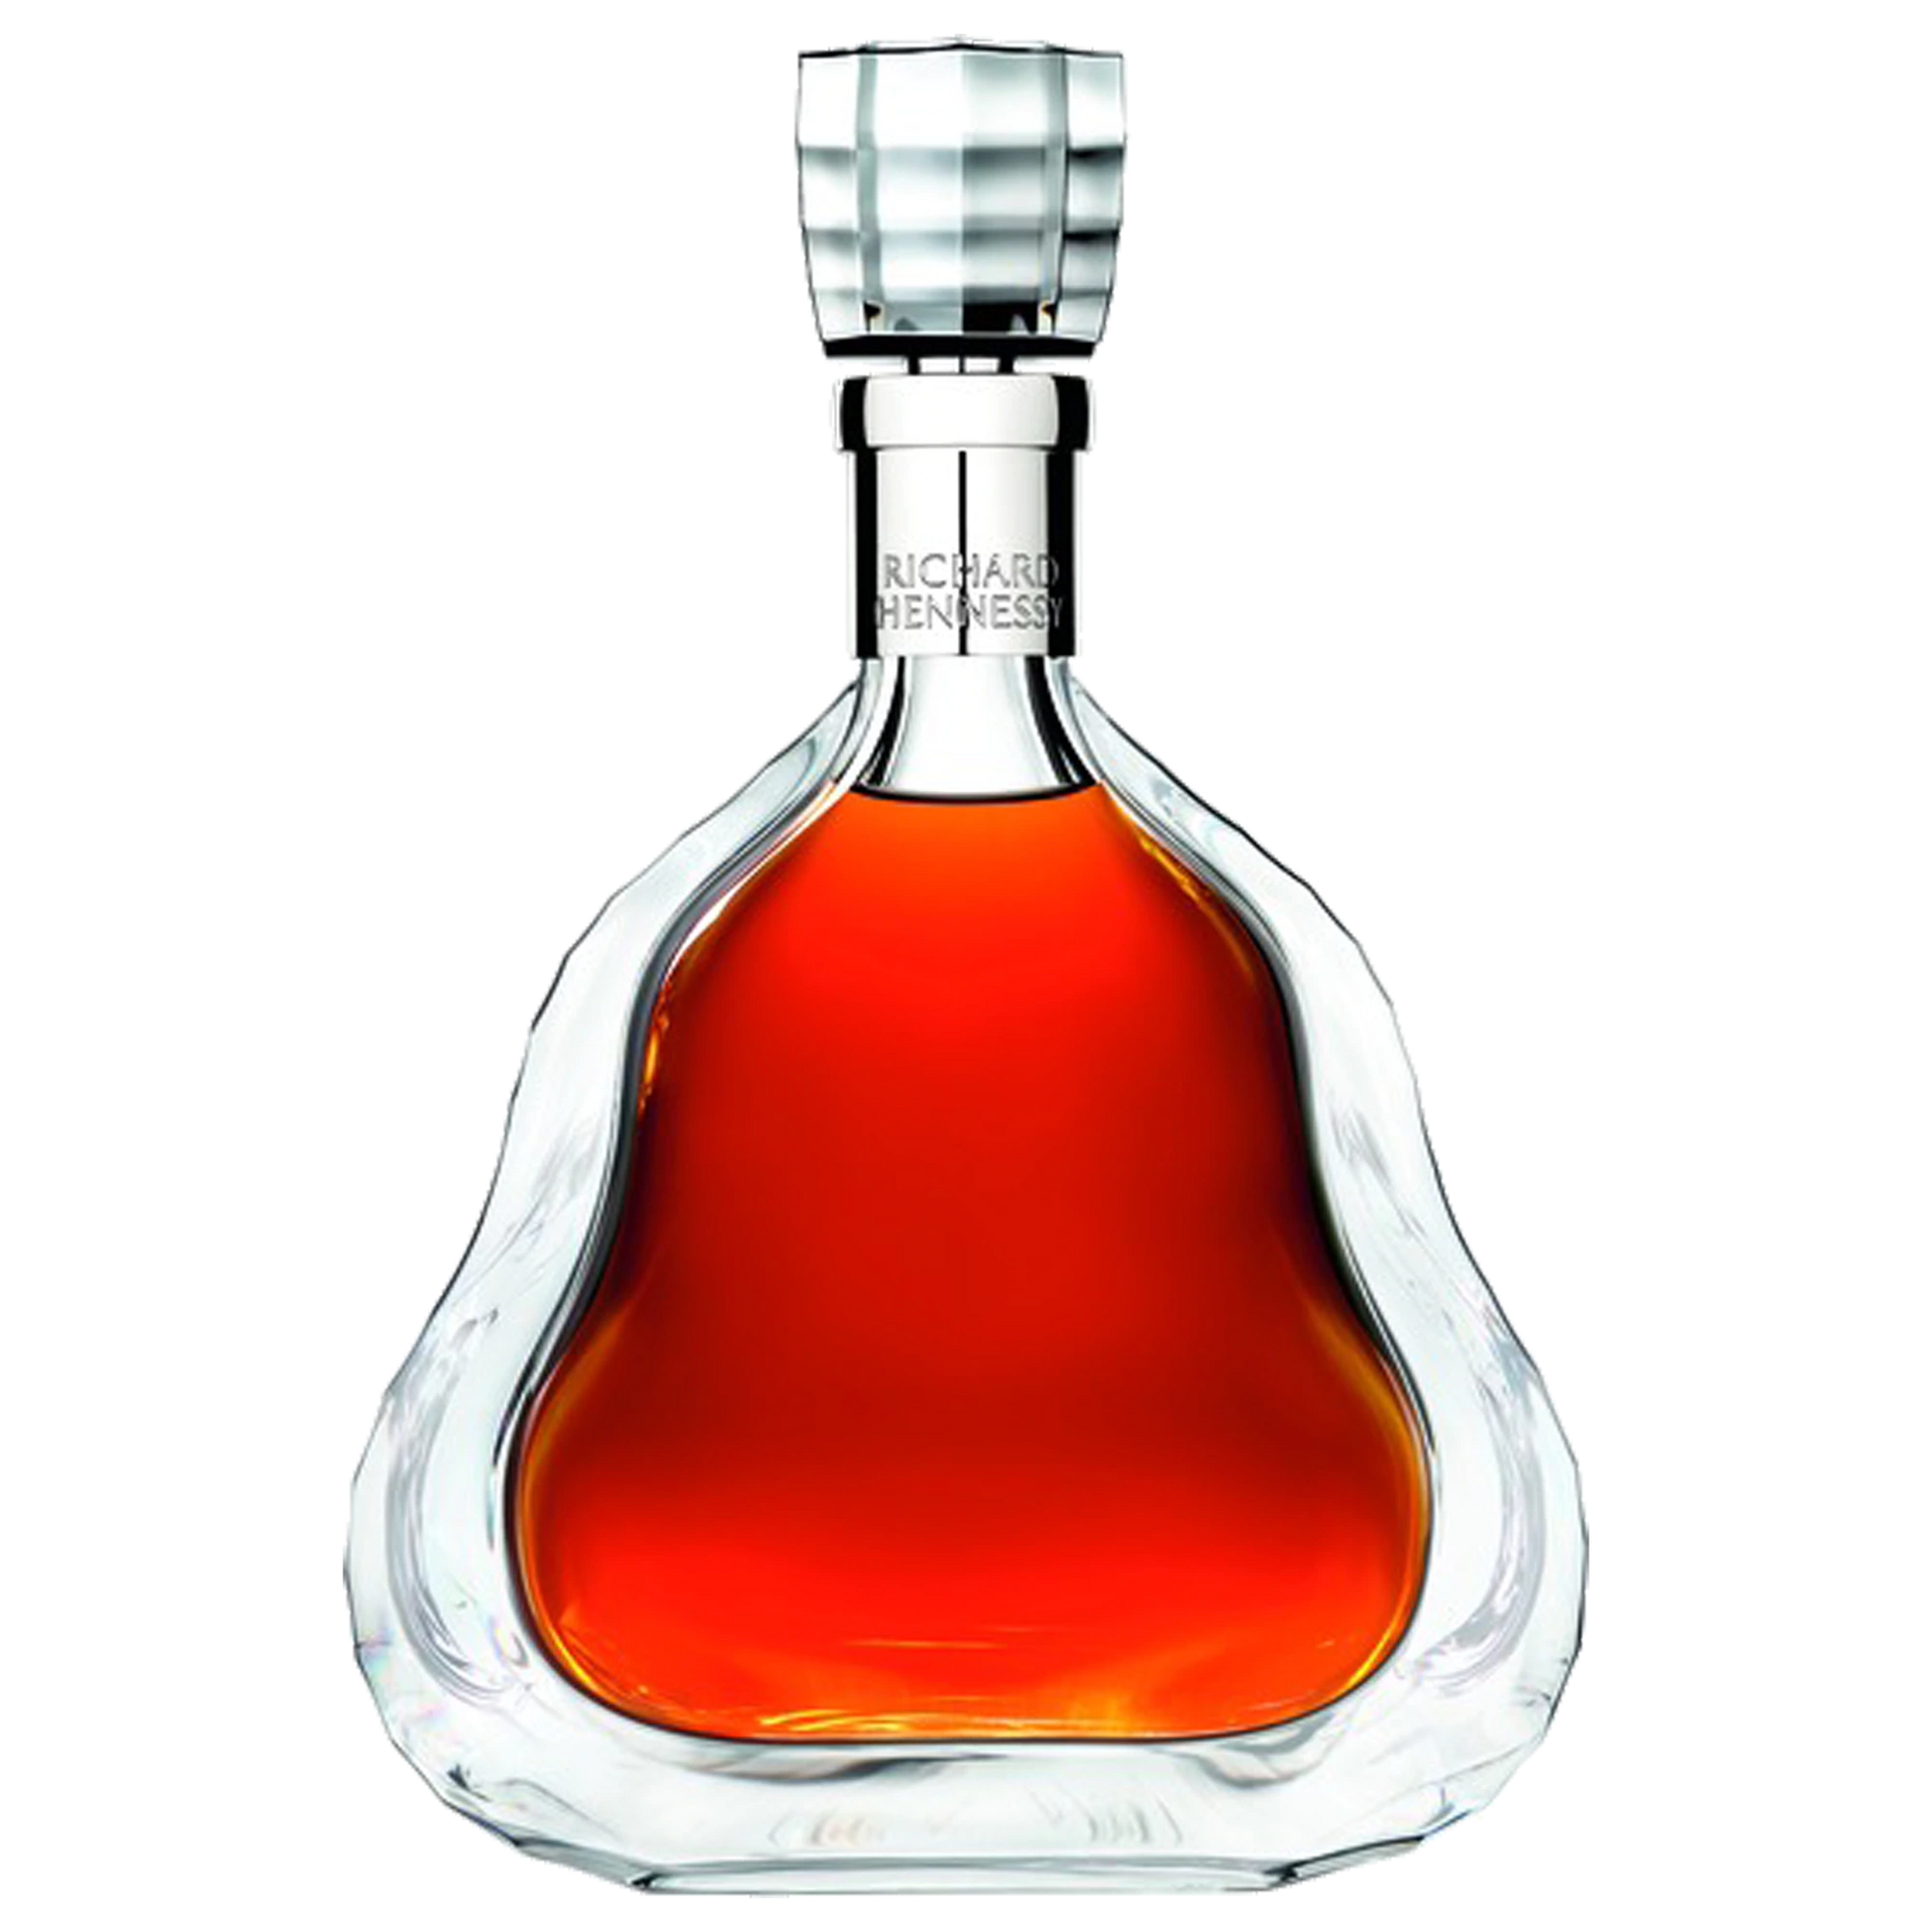 Hennessy Richard Hennessy Cognac 700ml - Boozeit.com.au